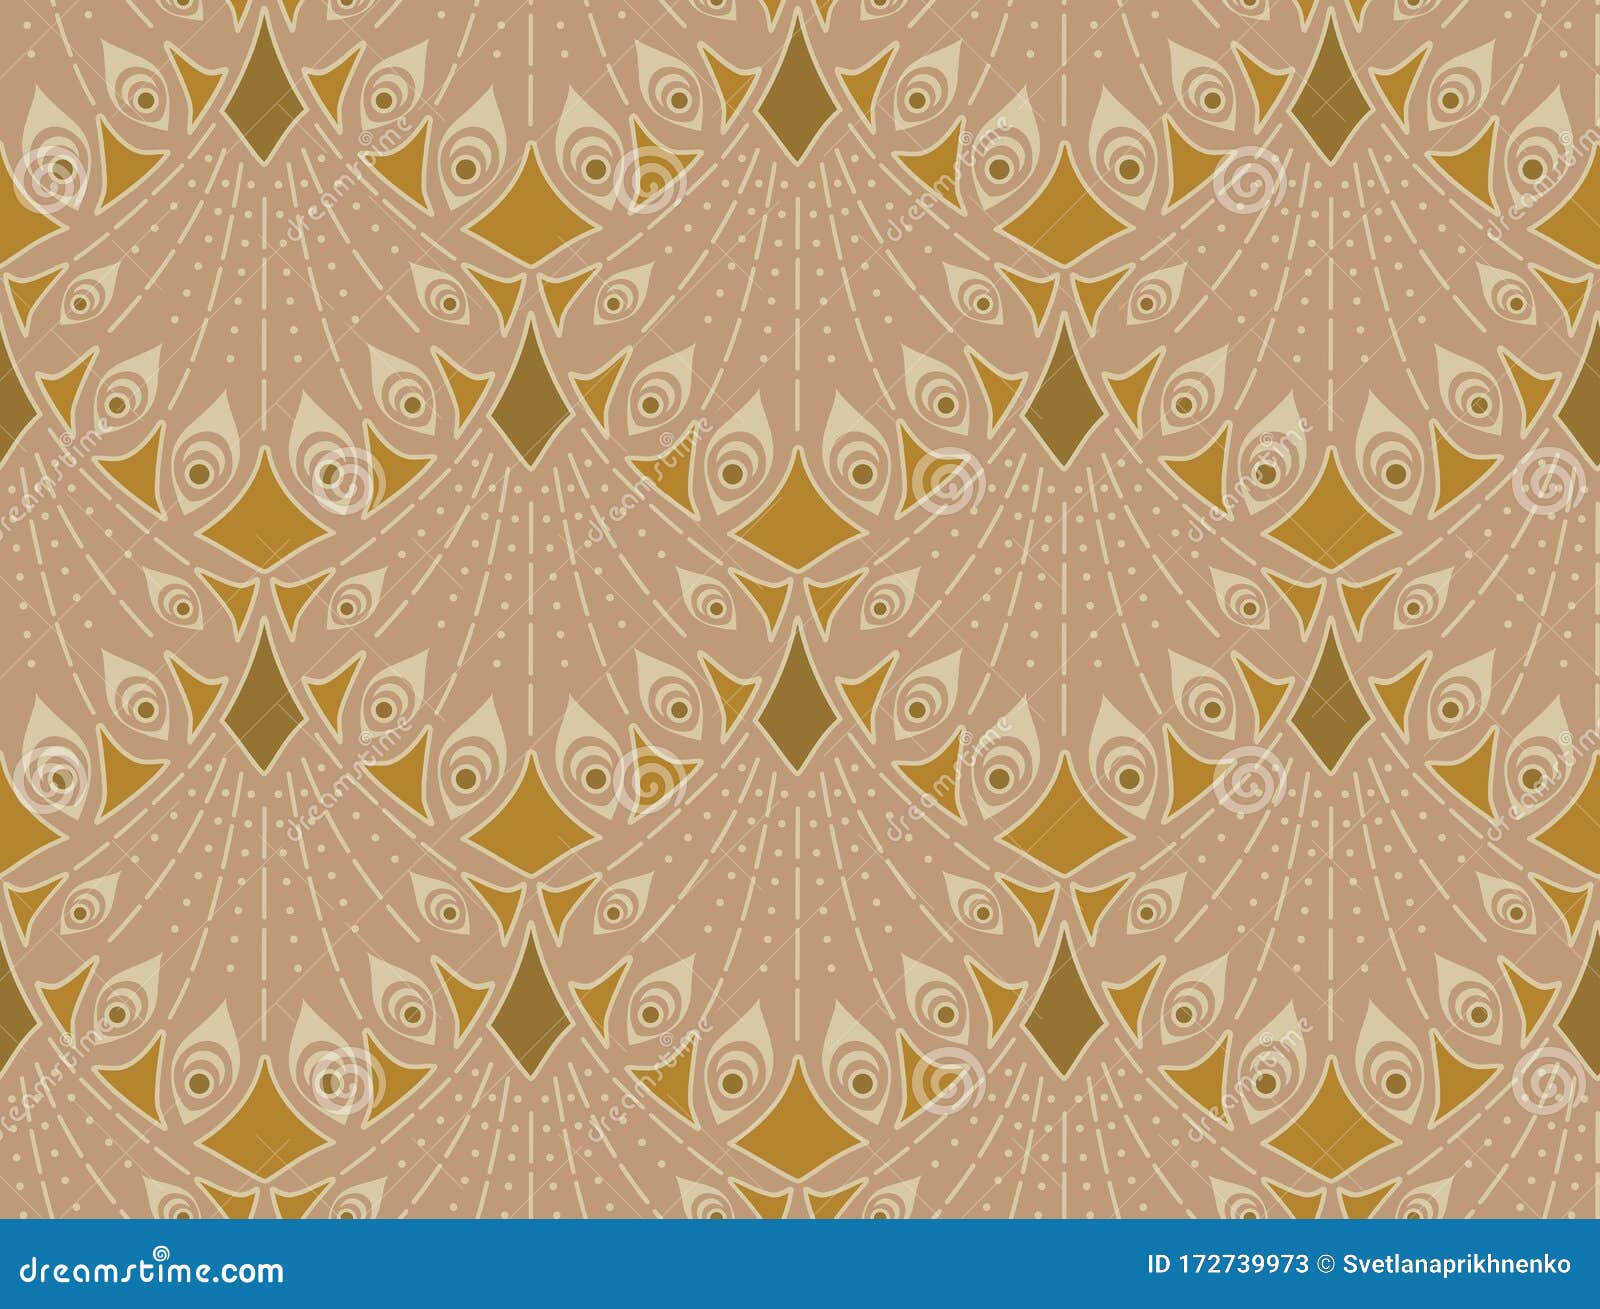 https://thumbs.dreamstime.com/z/art-nouveau-seamless-pattern-brown-colors-vintage-elegant-background-172739973.jpg